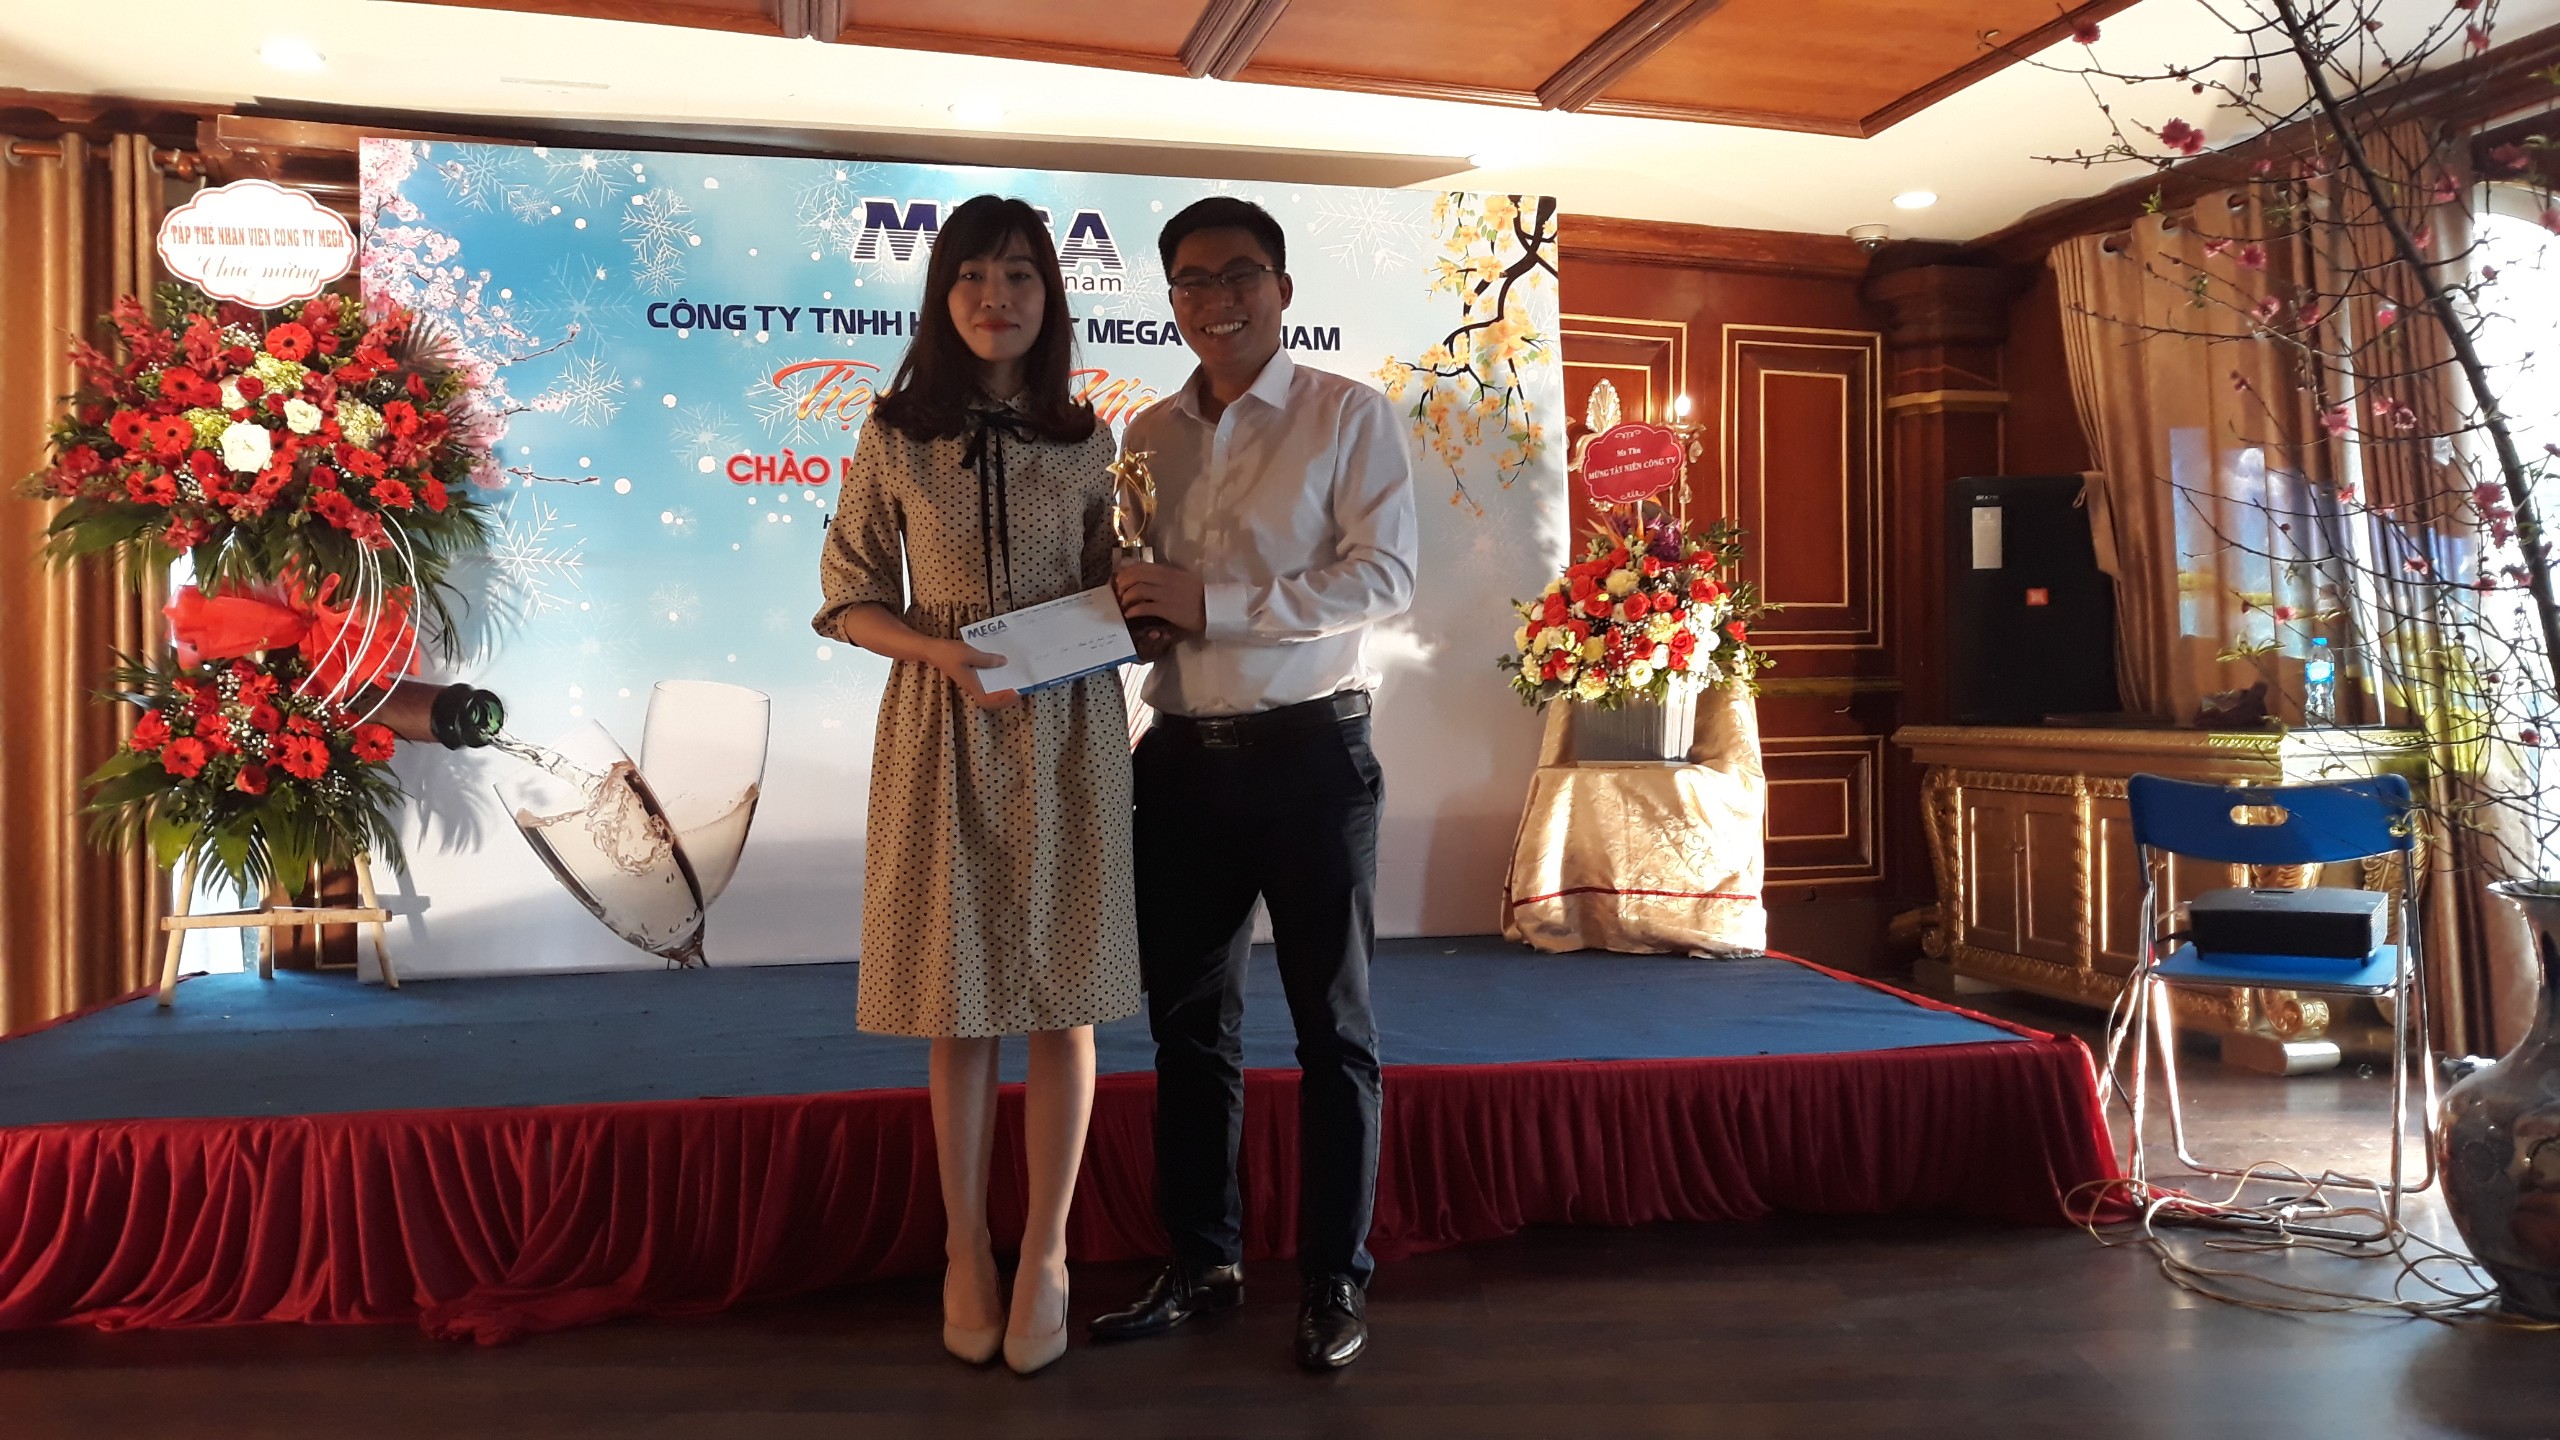 Ms. Hoang Thi Mai Linh won the Best Sales Staff award